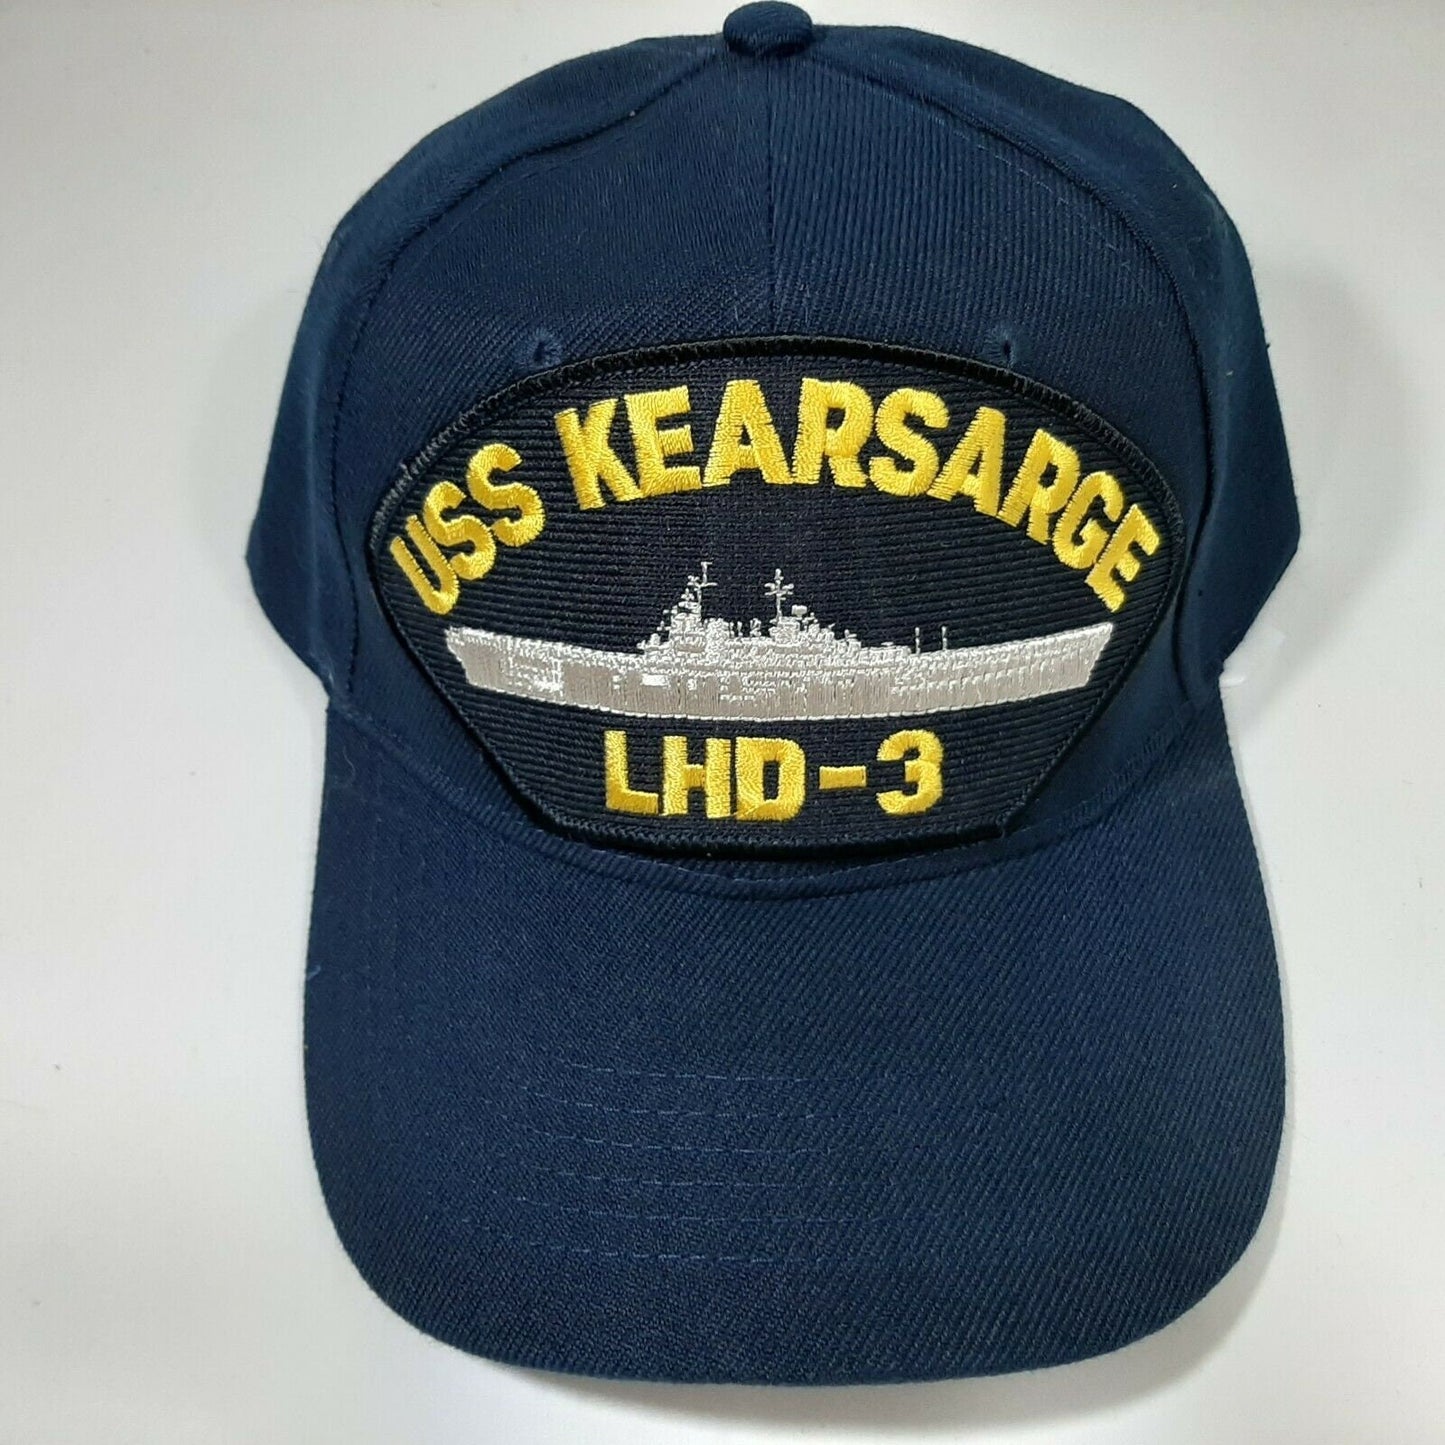 U.S. Navy USS Kearsarge LHD-3 Men's Patch Cap Hat Navy Blue Acrylic